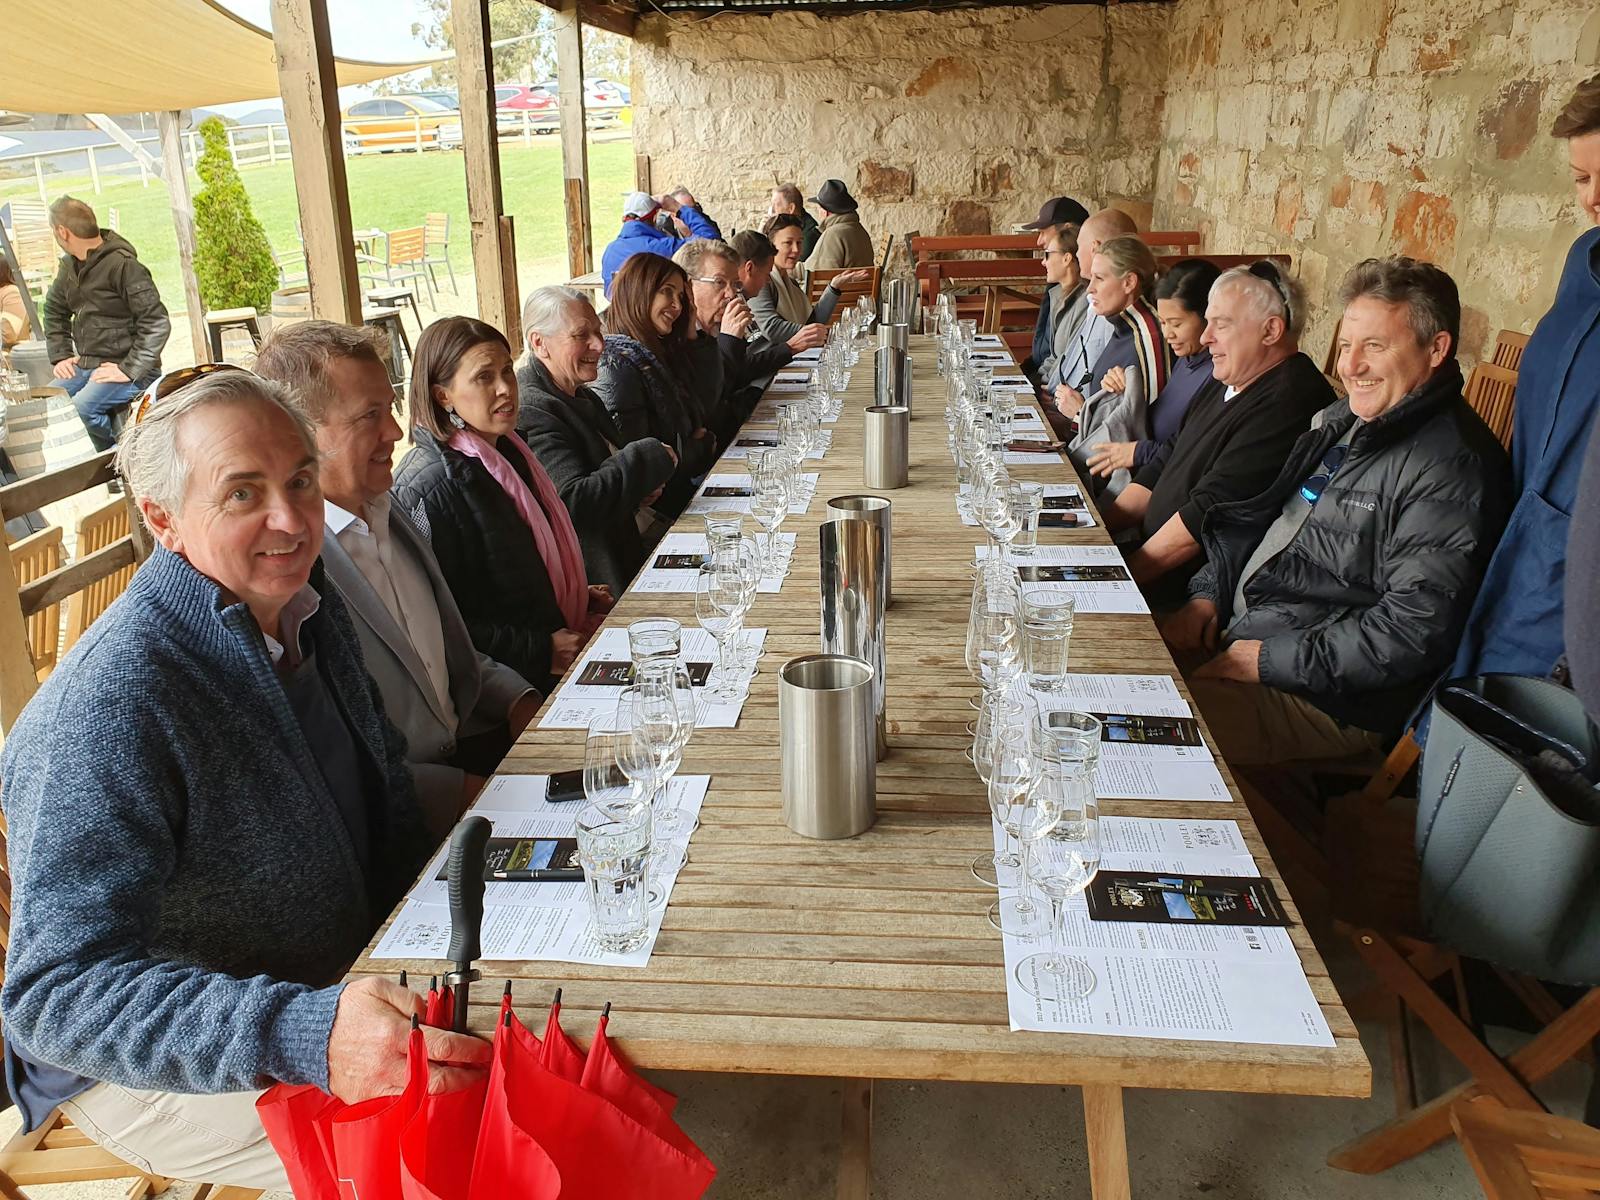 Wonderful times and tastings stelavino guided wine tours hobart tasmania